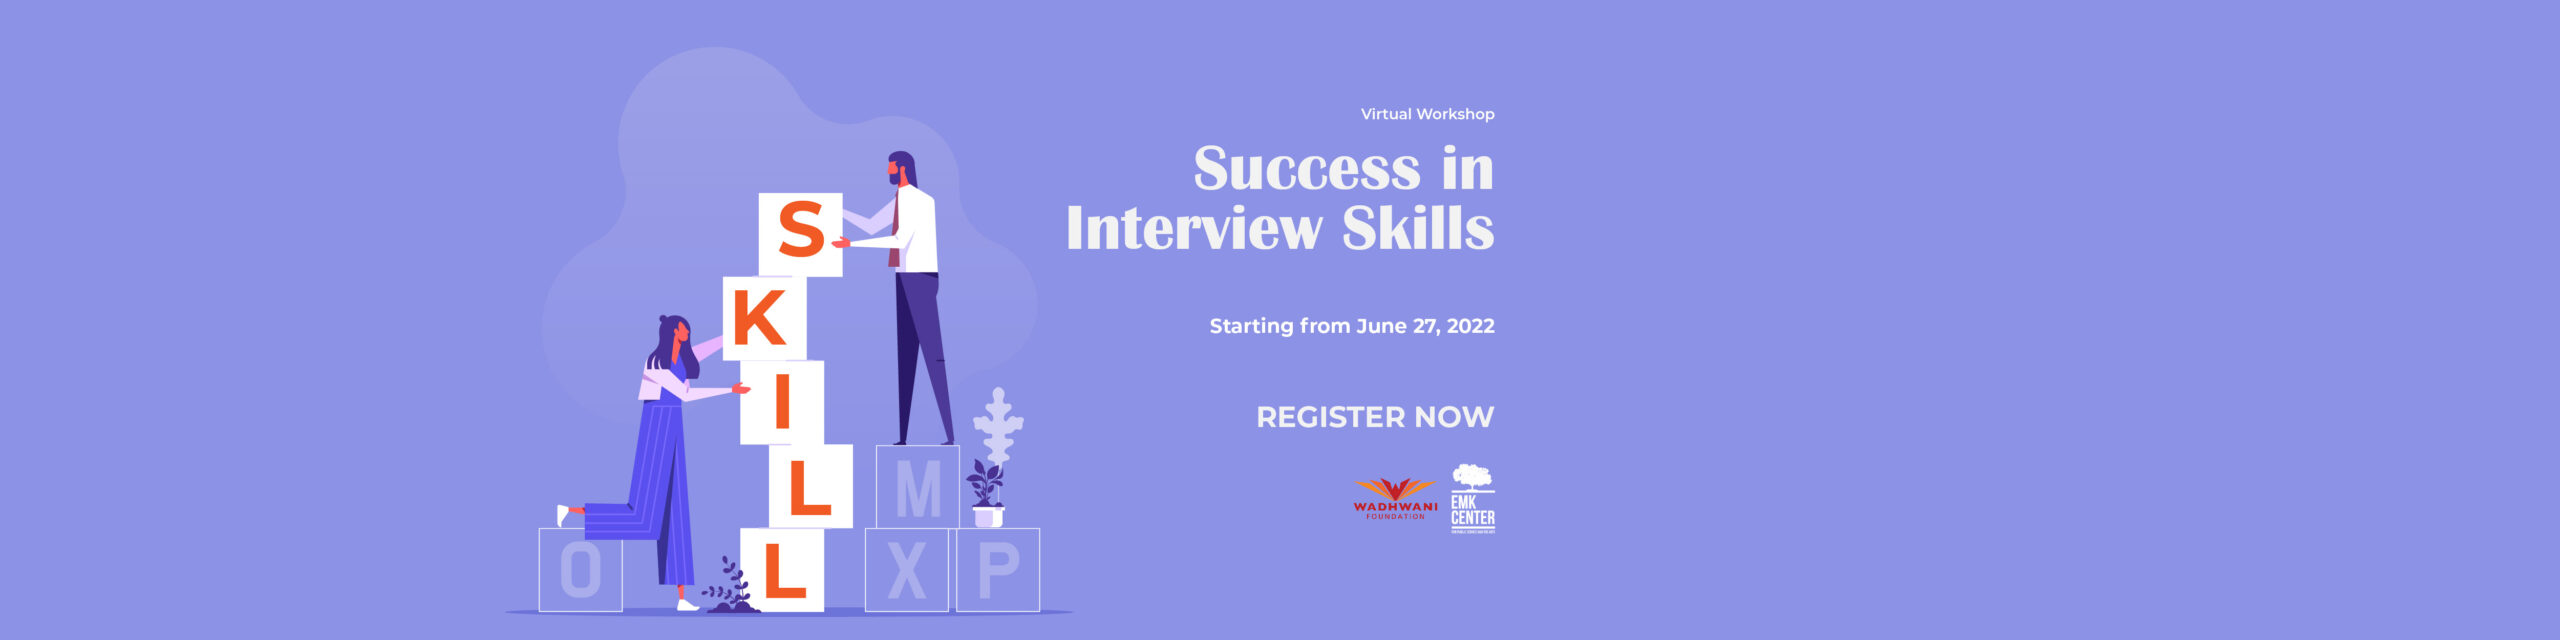 Success in Interview Skills